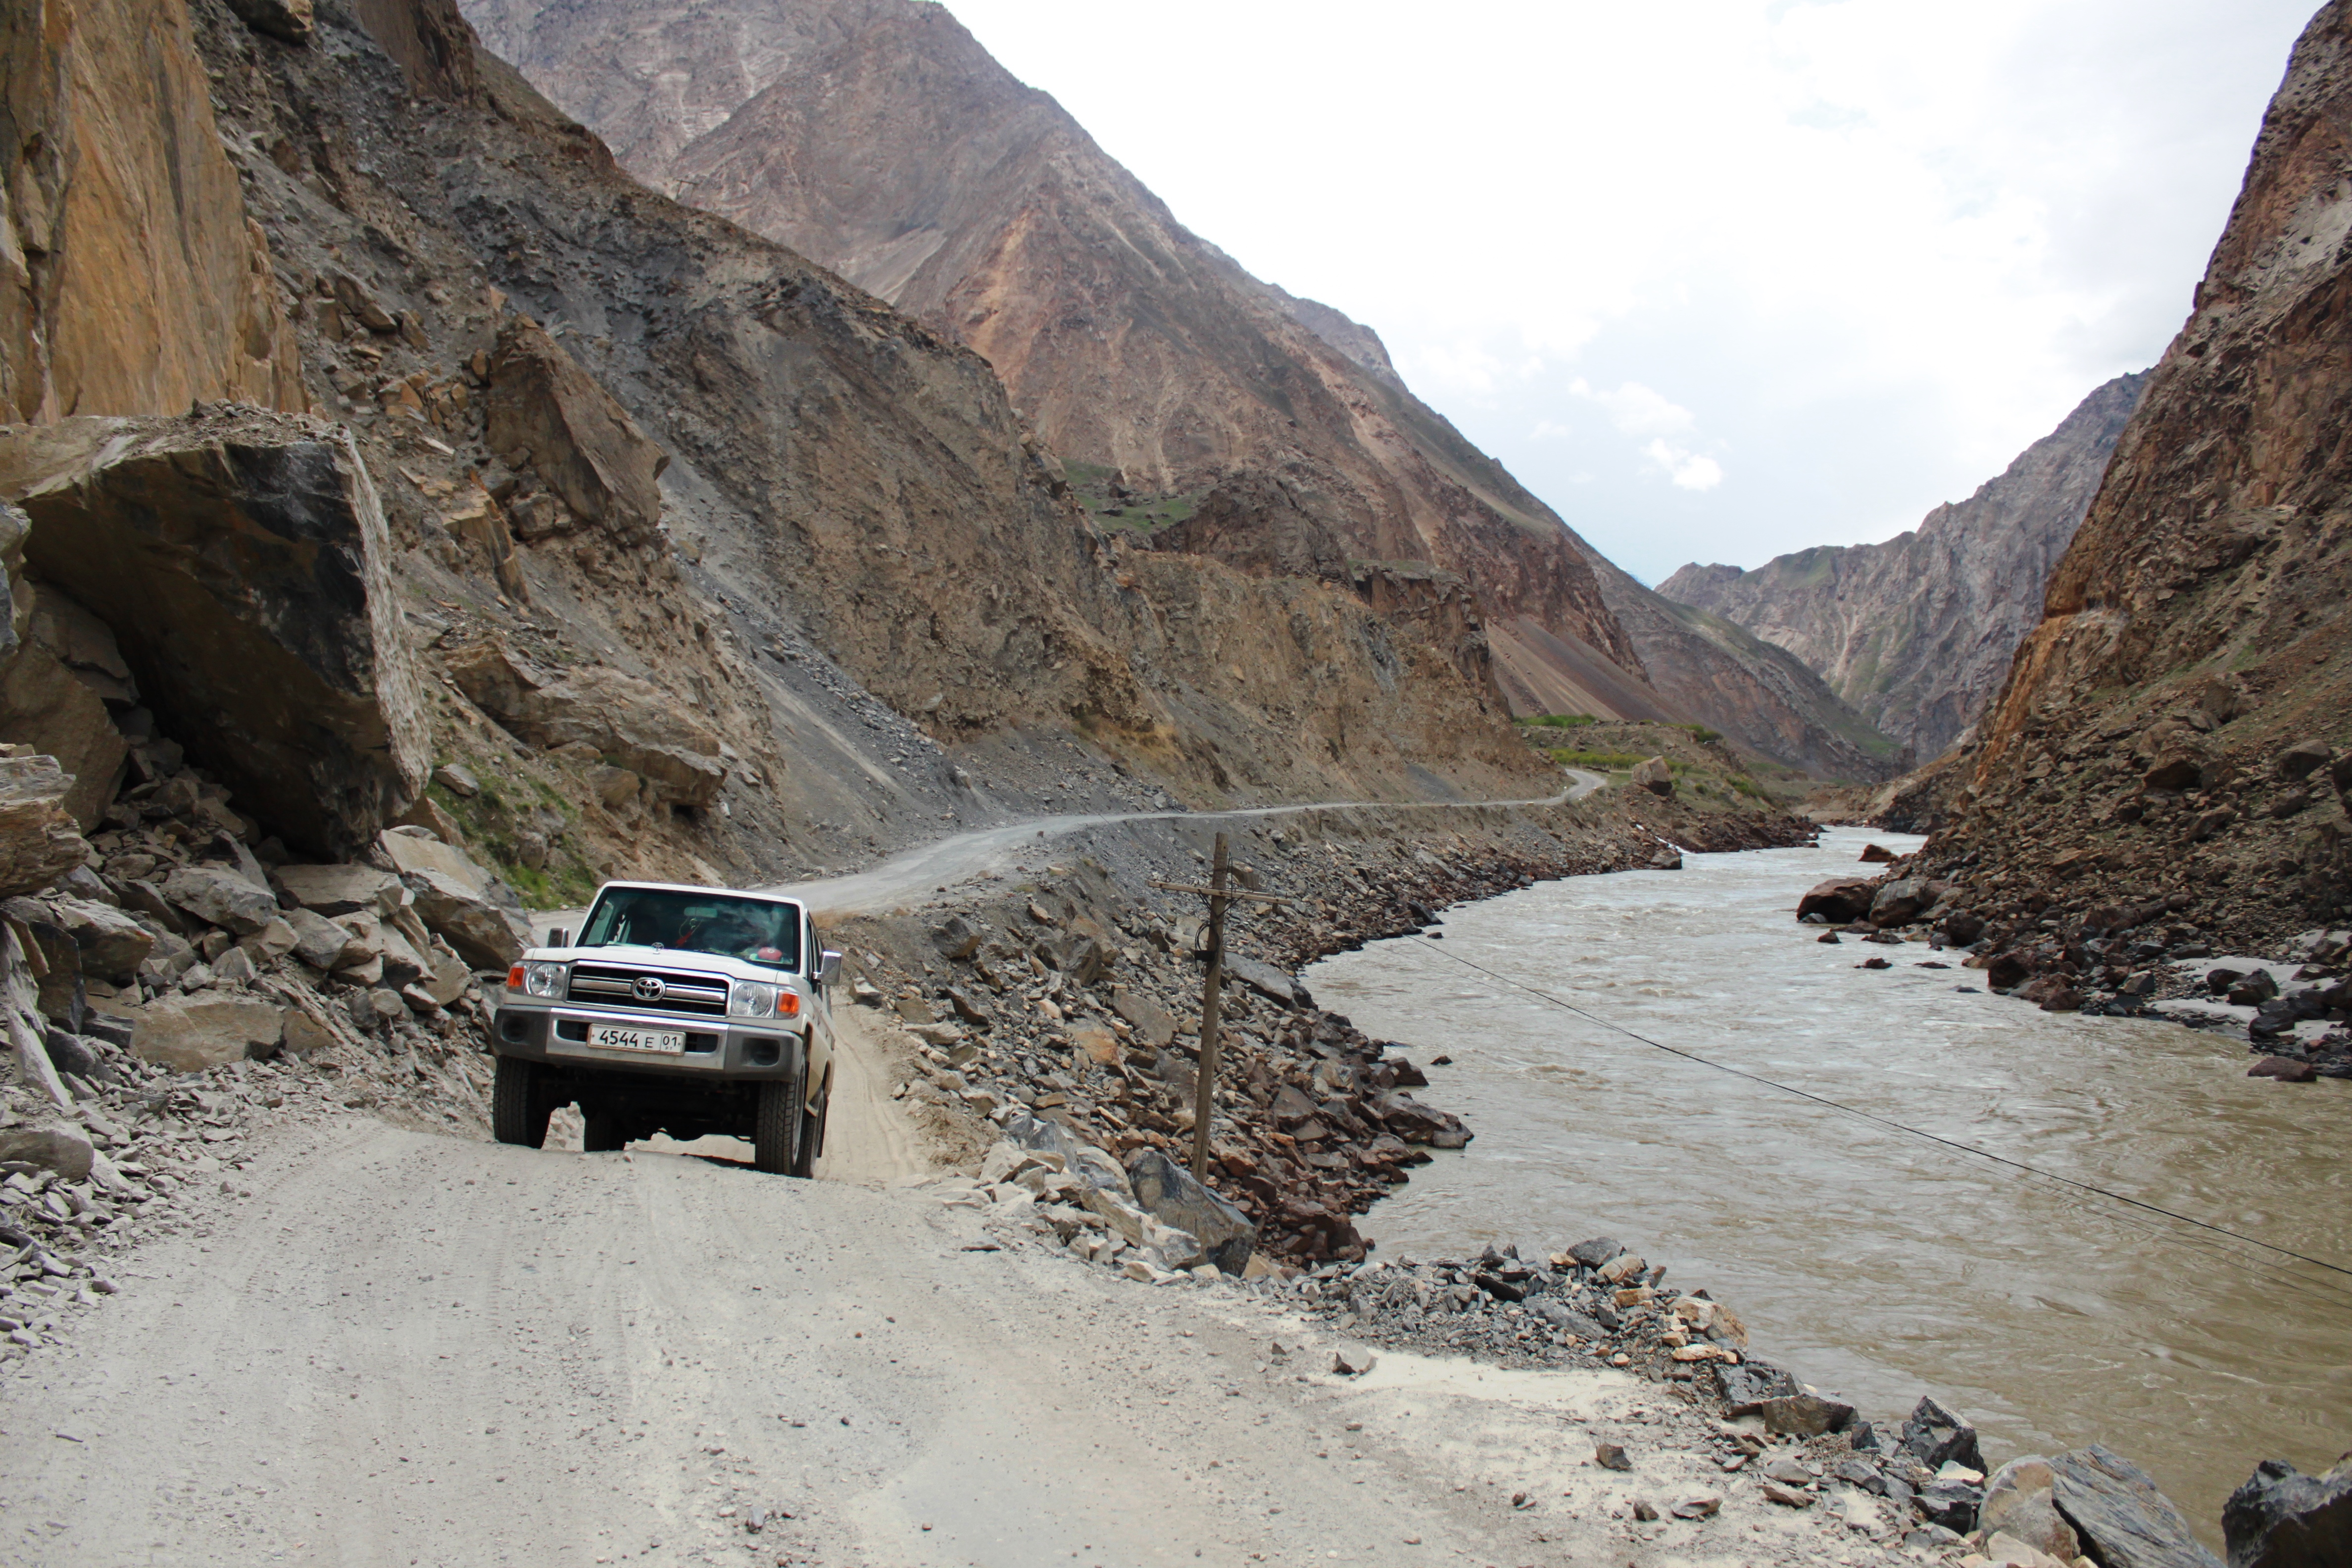 Road to Badakhshan. Photo by Abdulfattoh Shafiev